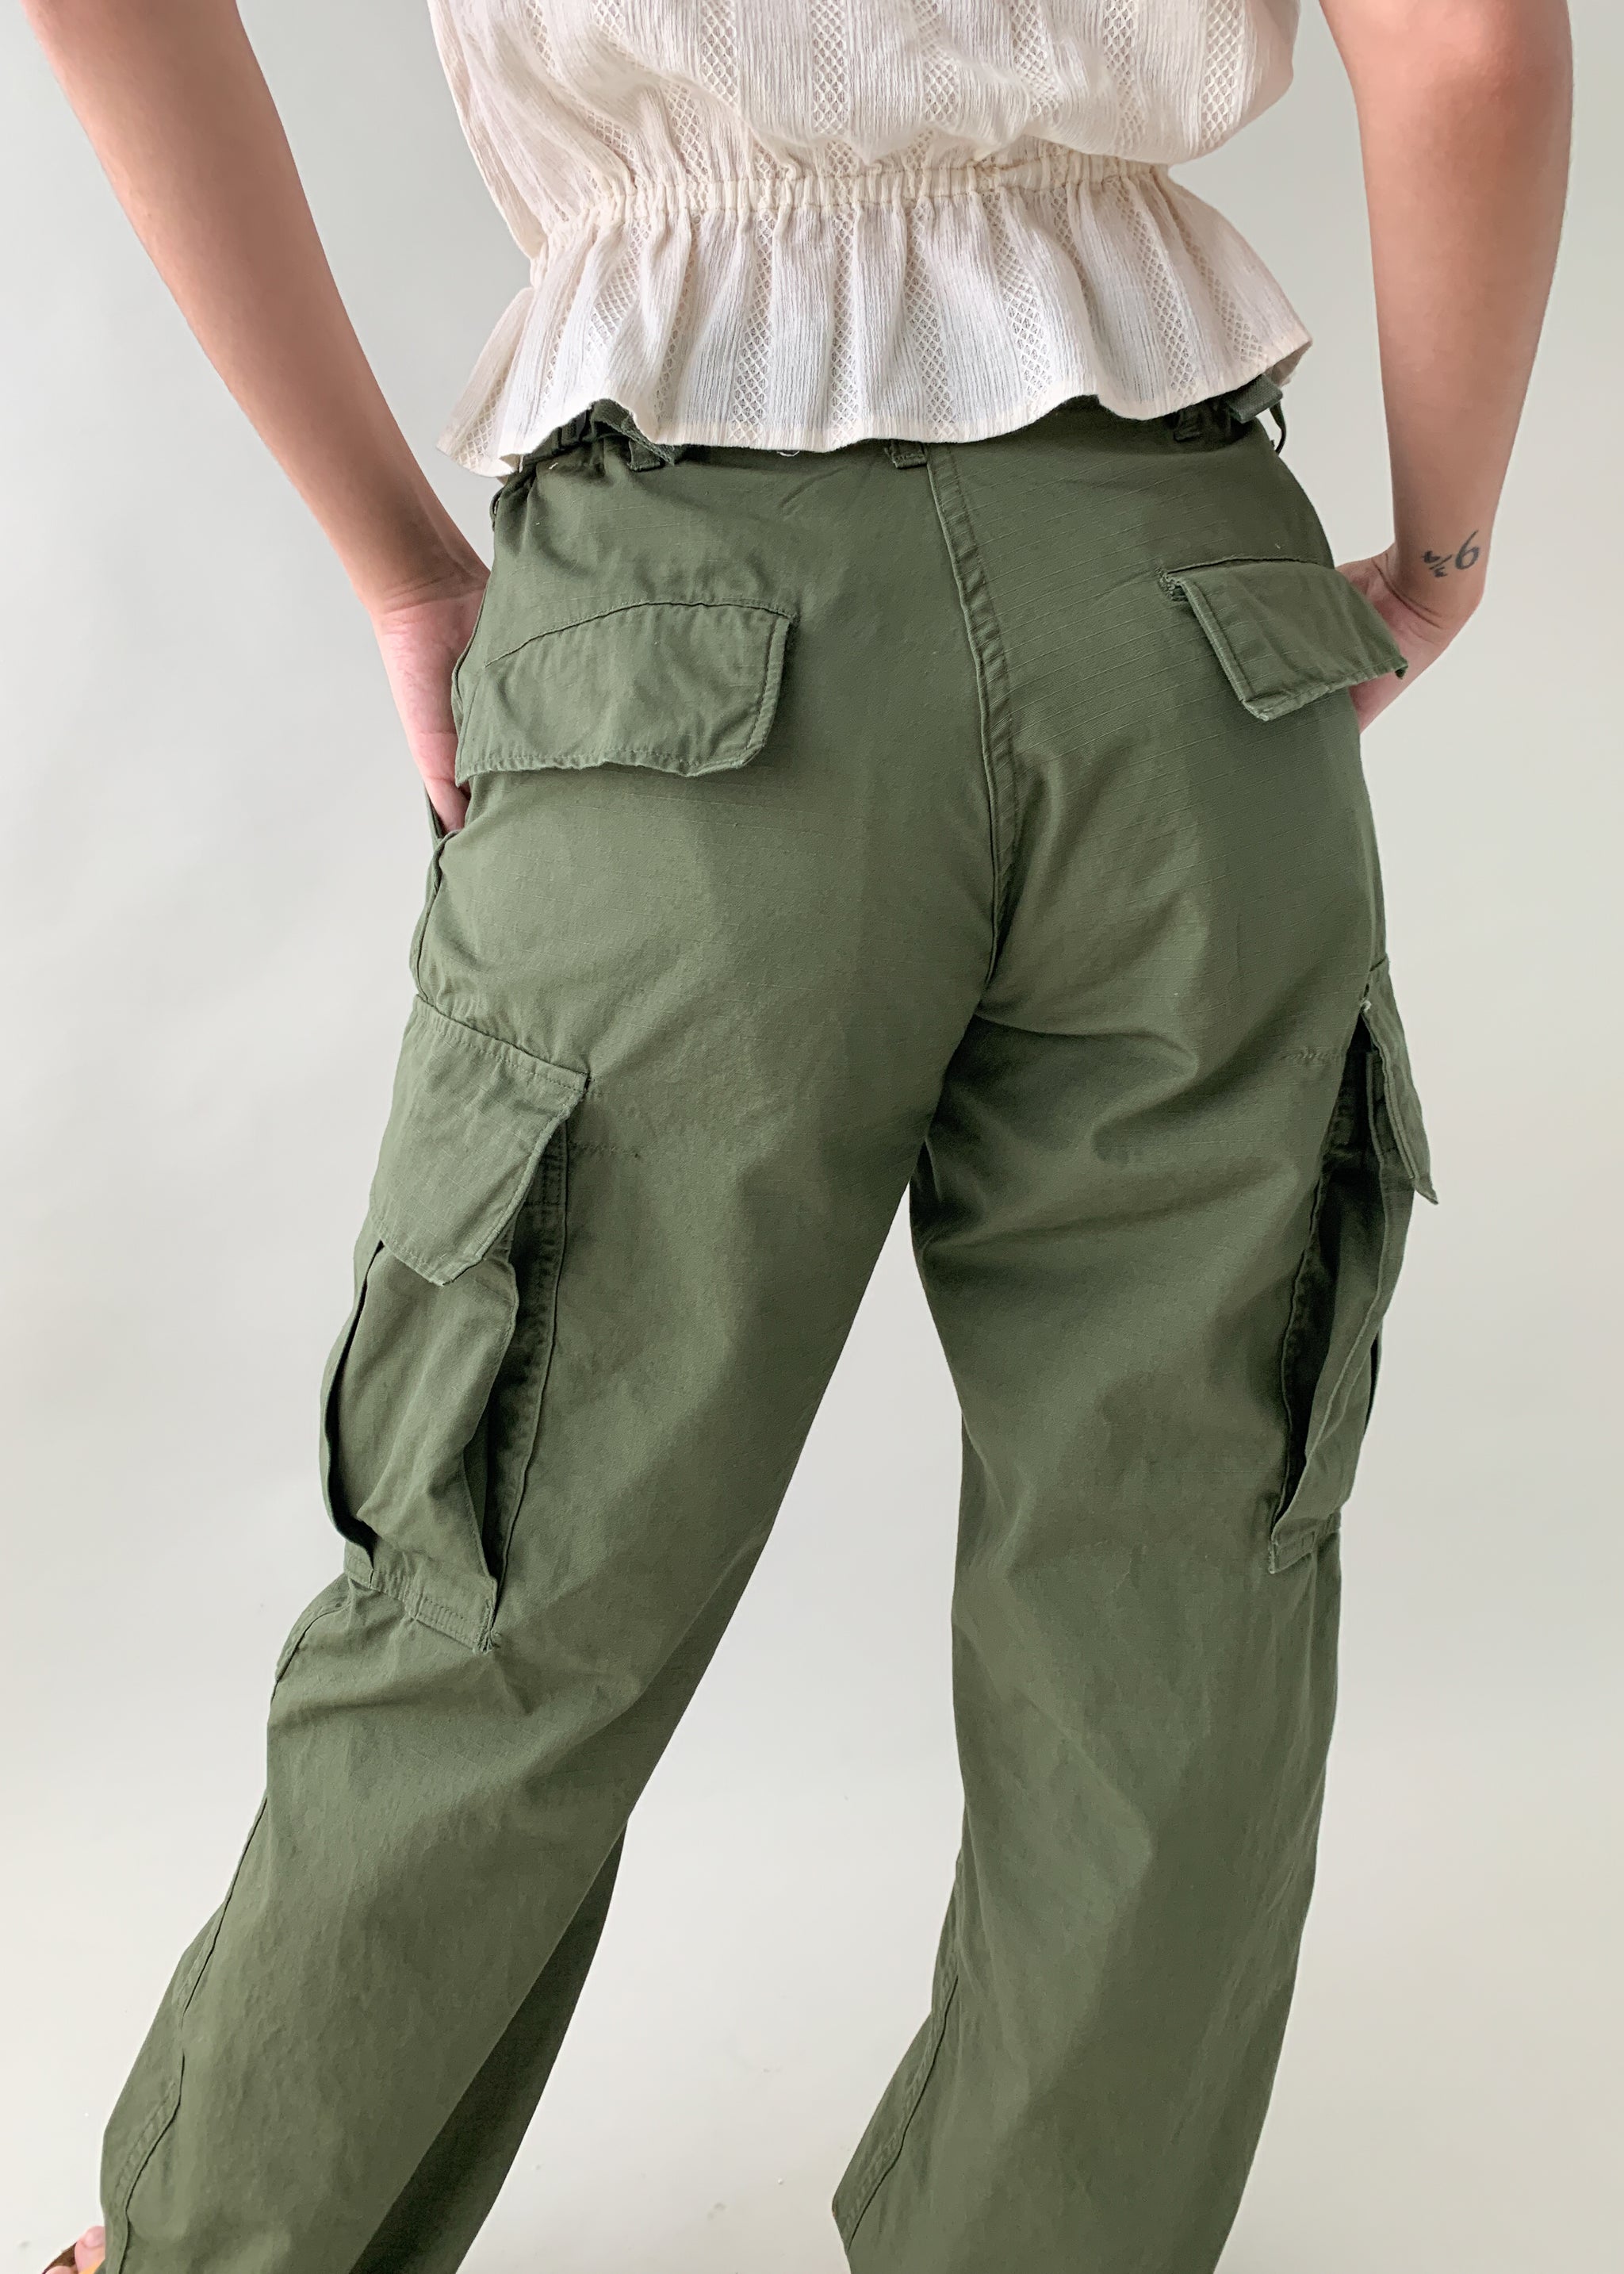 Boys/Youth US Polo Association Assn khaki cargo pants regular straight size  16 | eBay